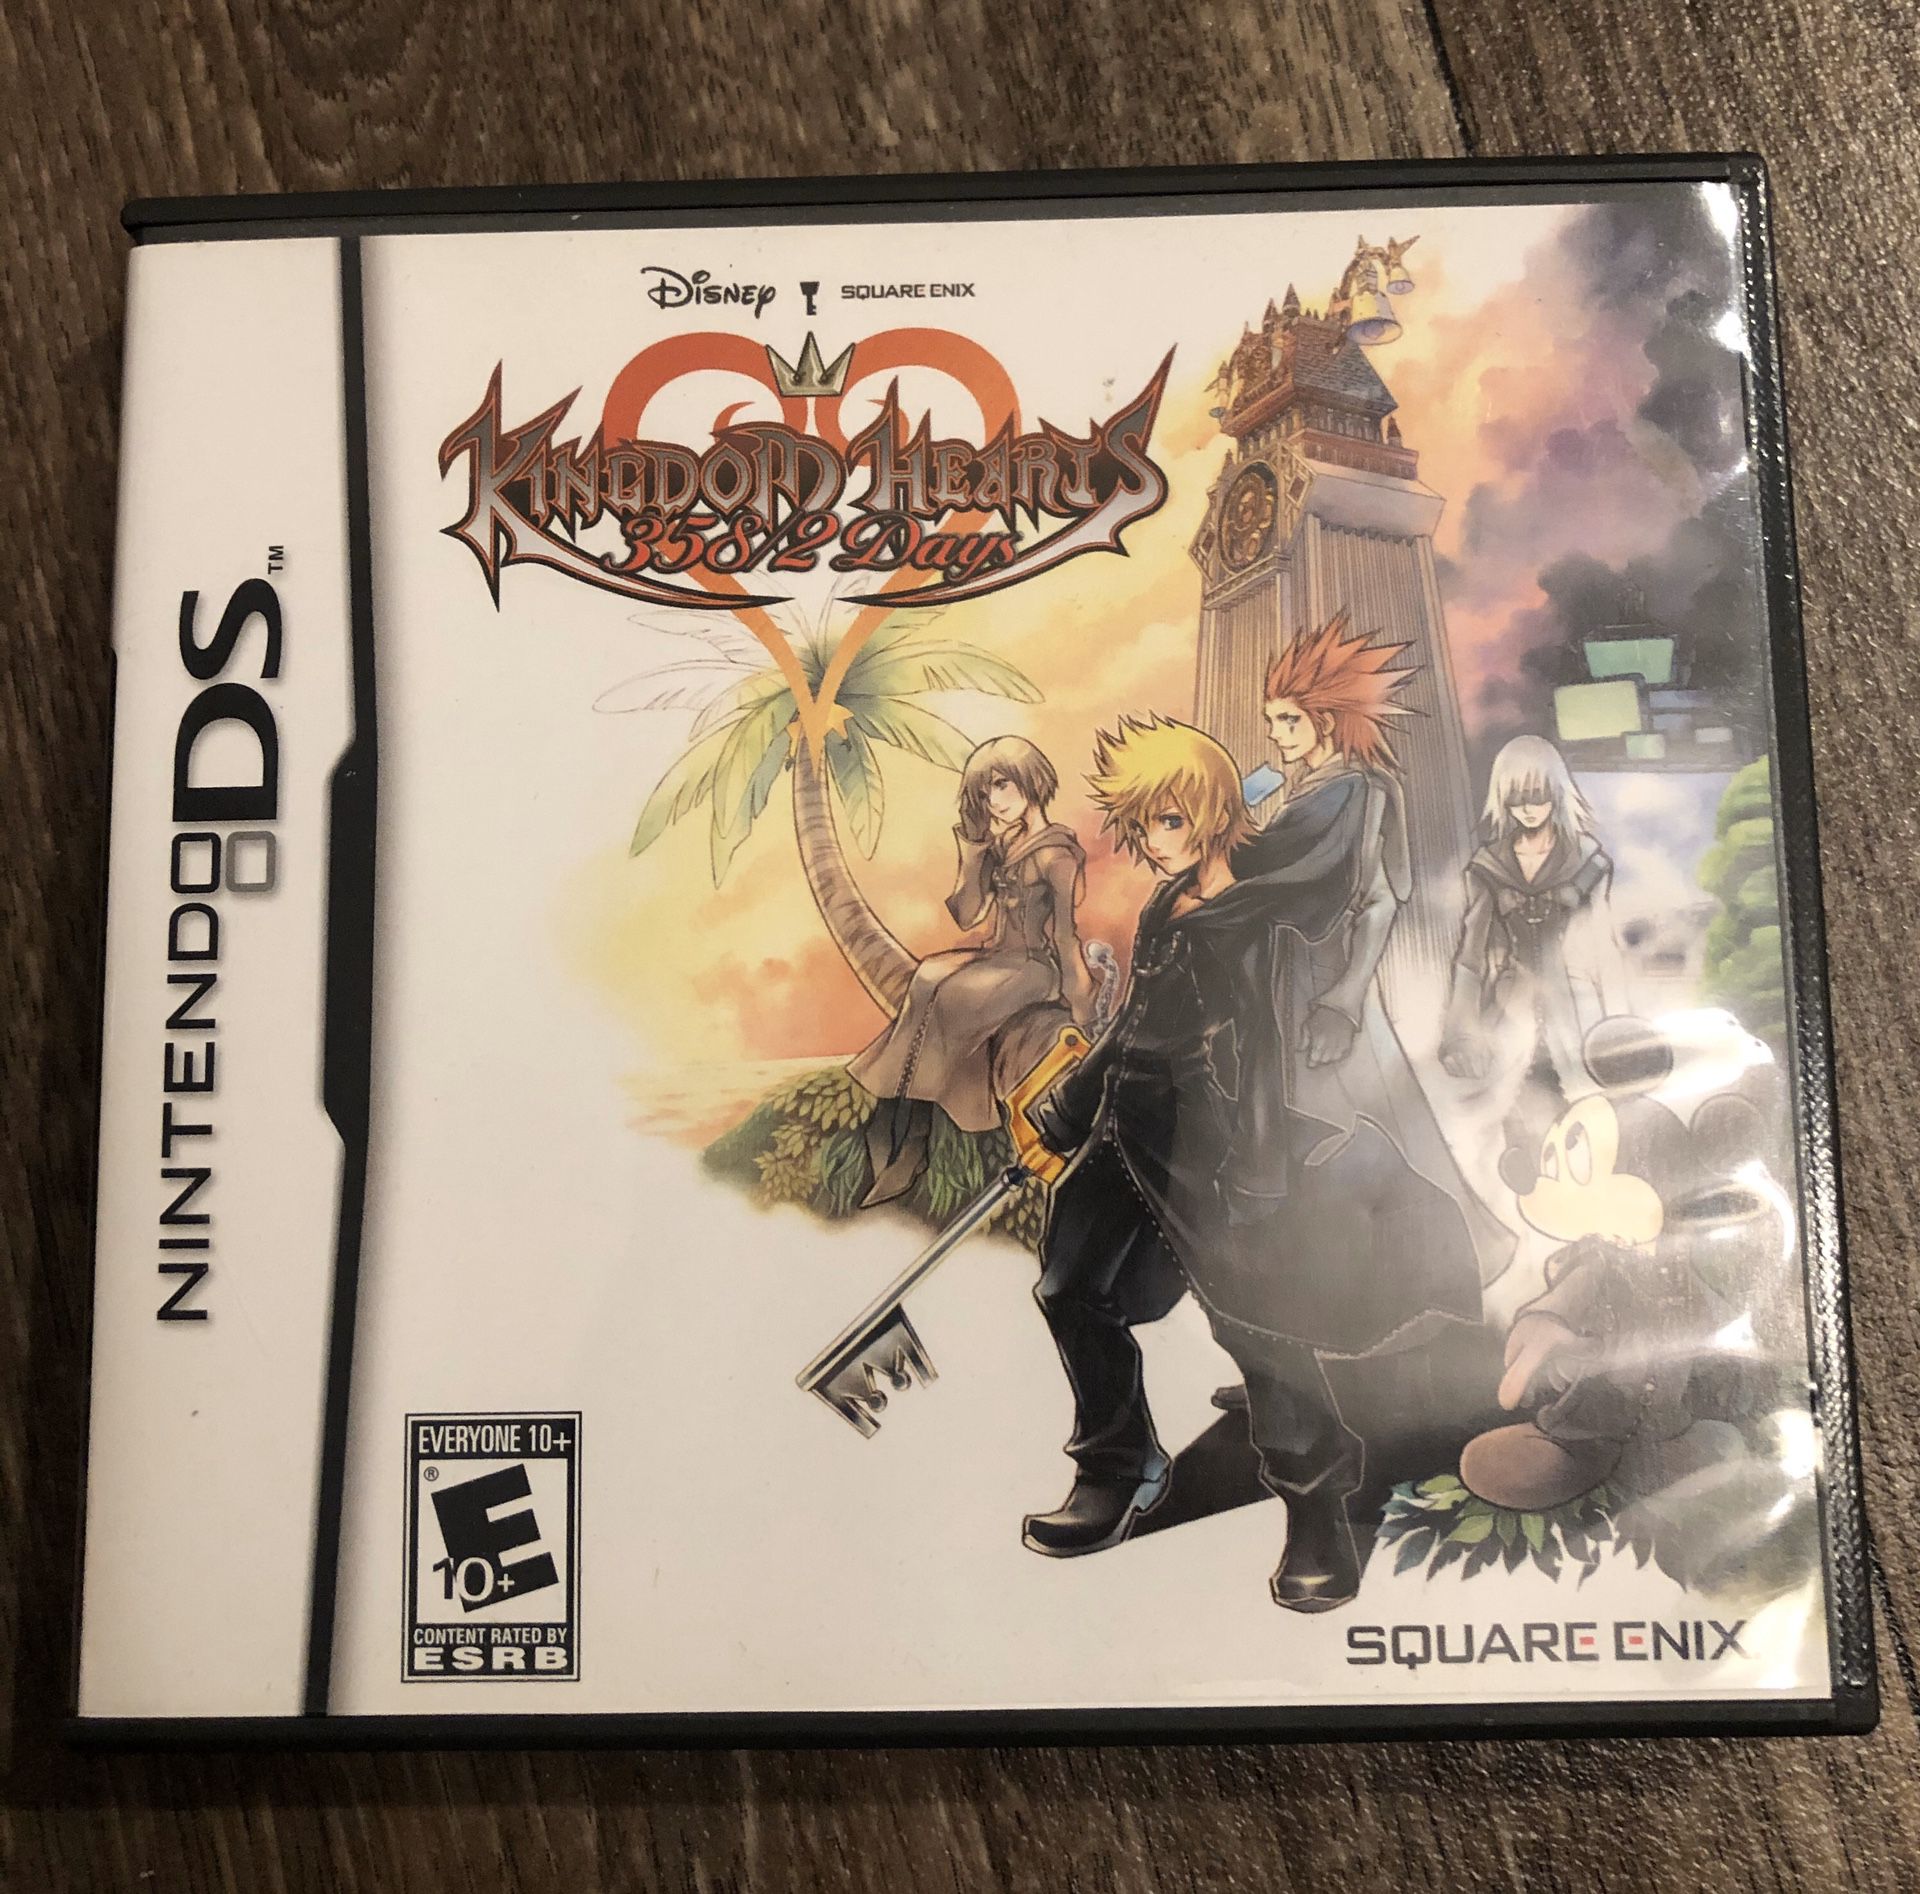 Kingdom Hearts 358/2 days - Nintendo DS